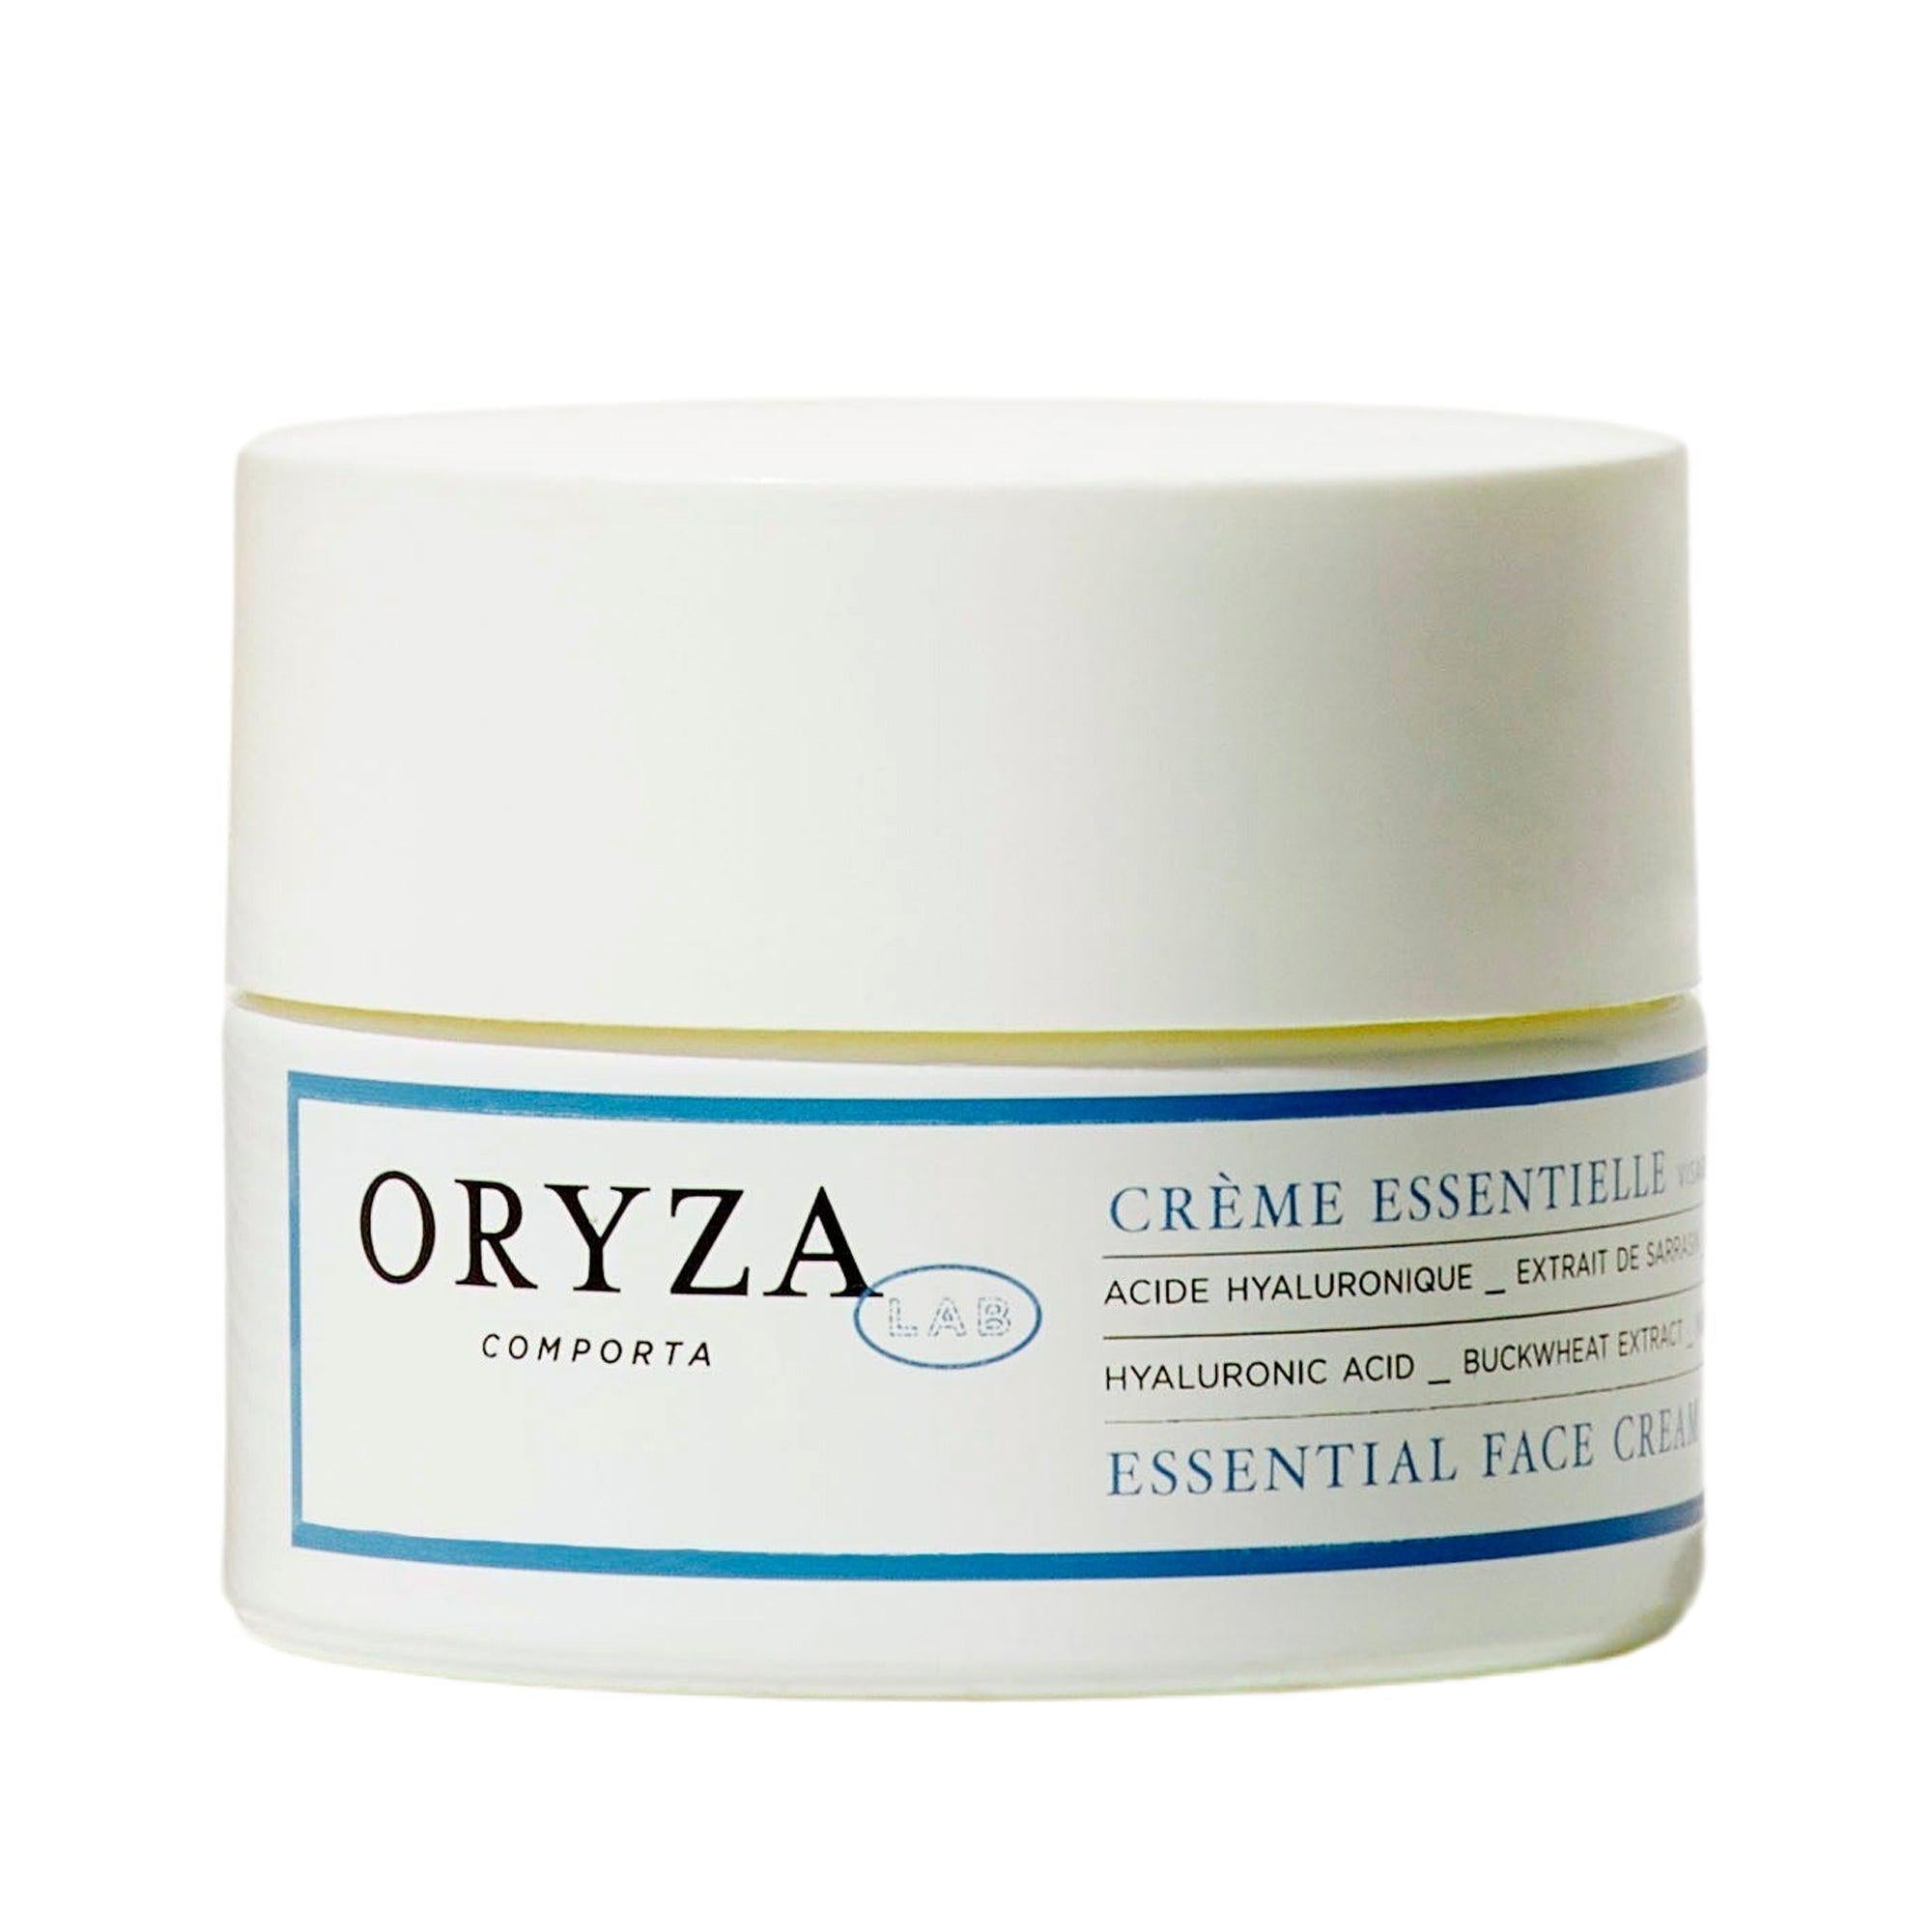 Indisponible - Crème Essentielle Indisponible - Crème Essentielle - Oryza Lab